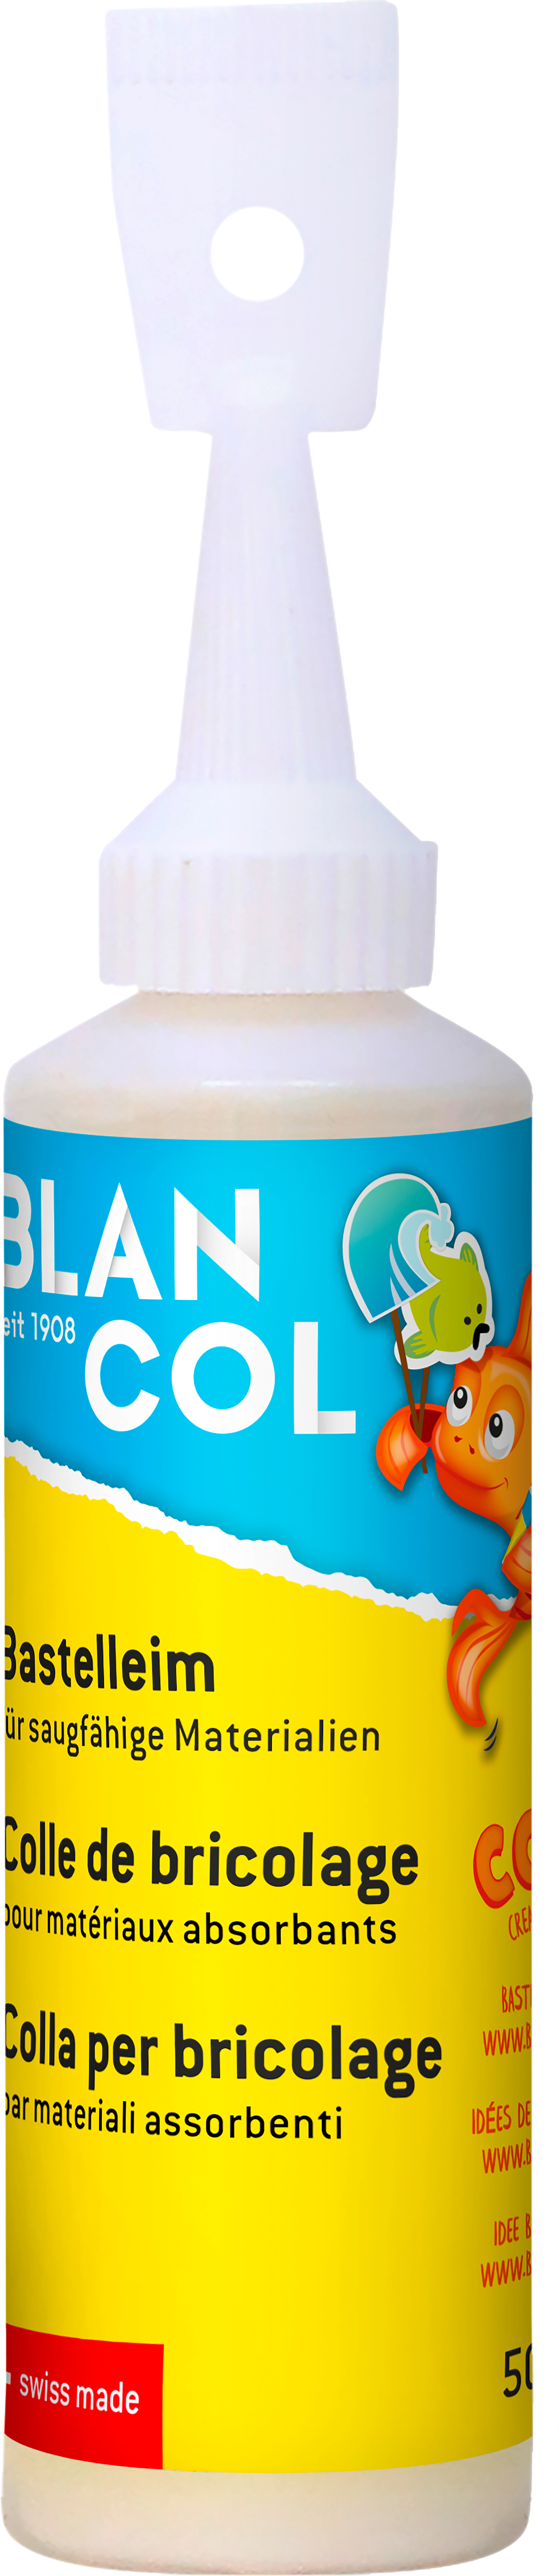 BLANCOL Colle bricolage 31301 50g